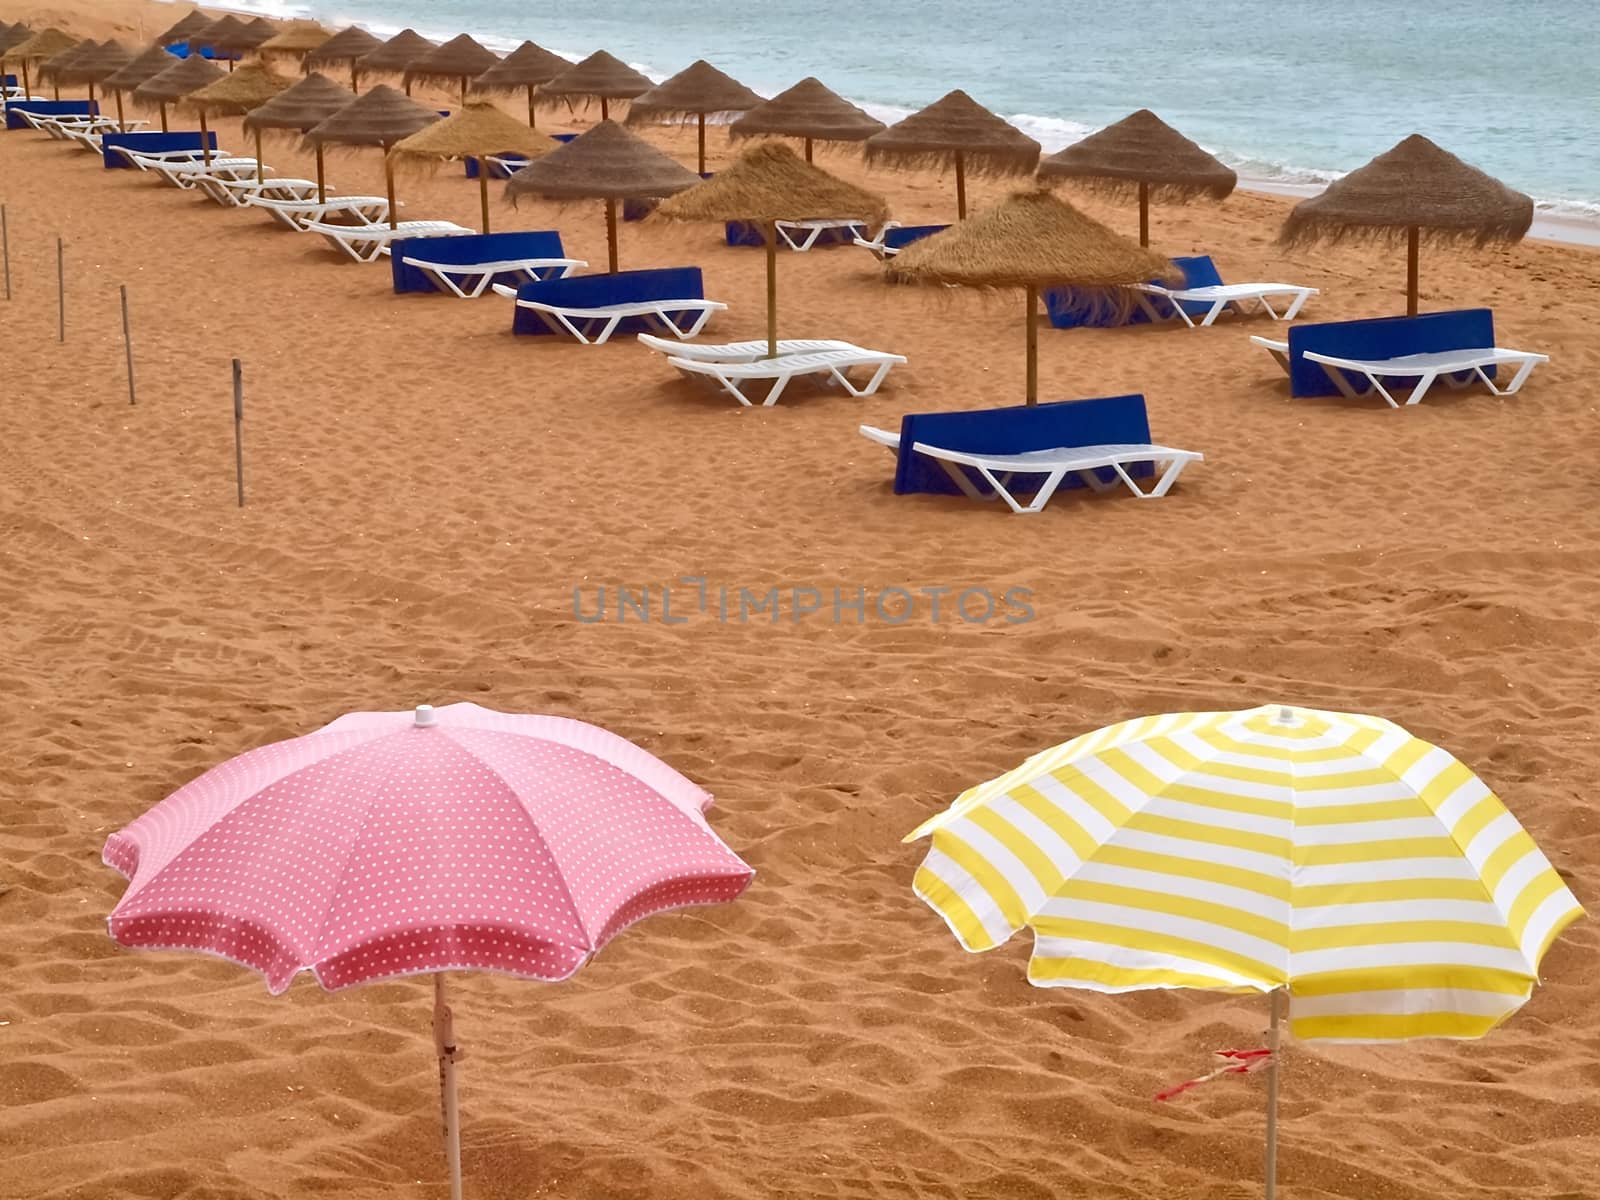 Umbrellas and sunbeds at an empty beach